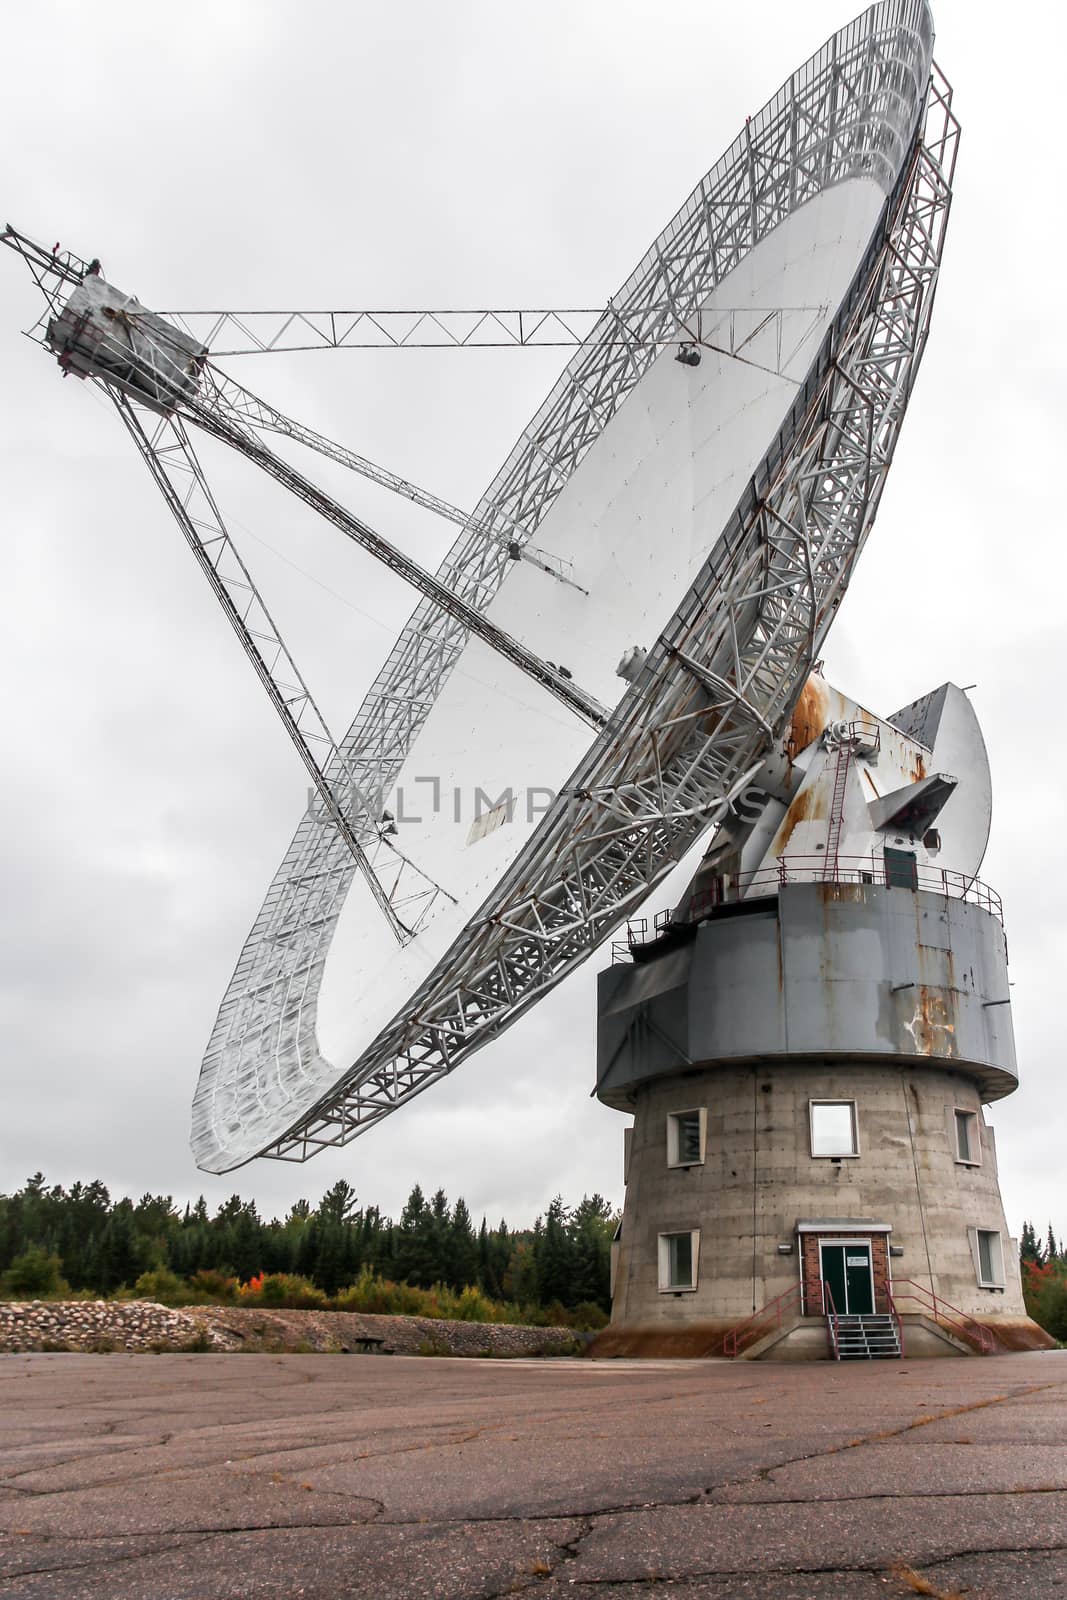 Old radiotelescope by lprising